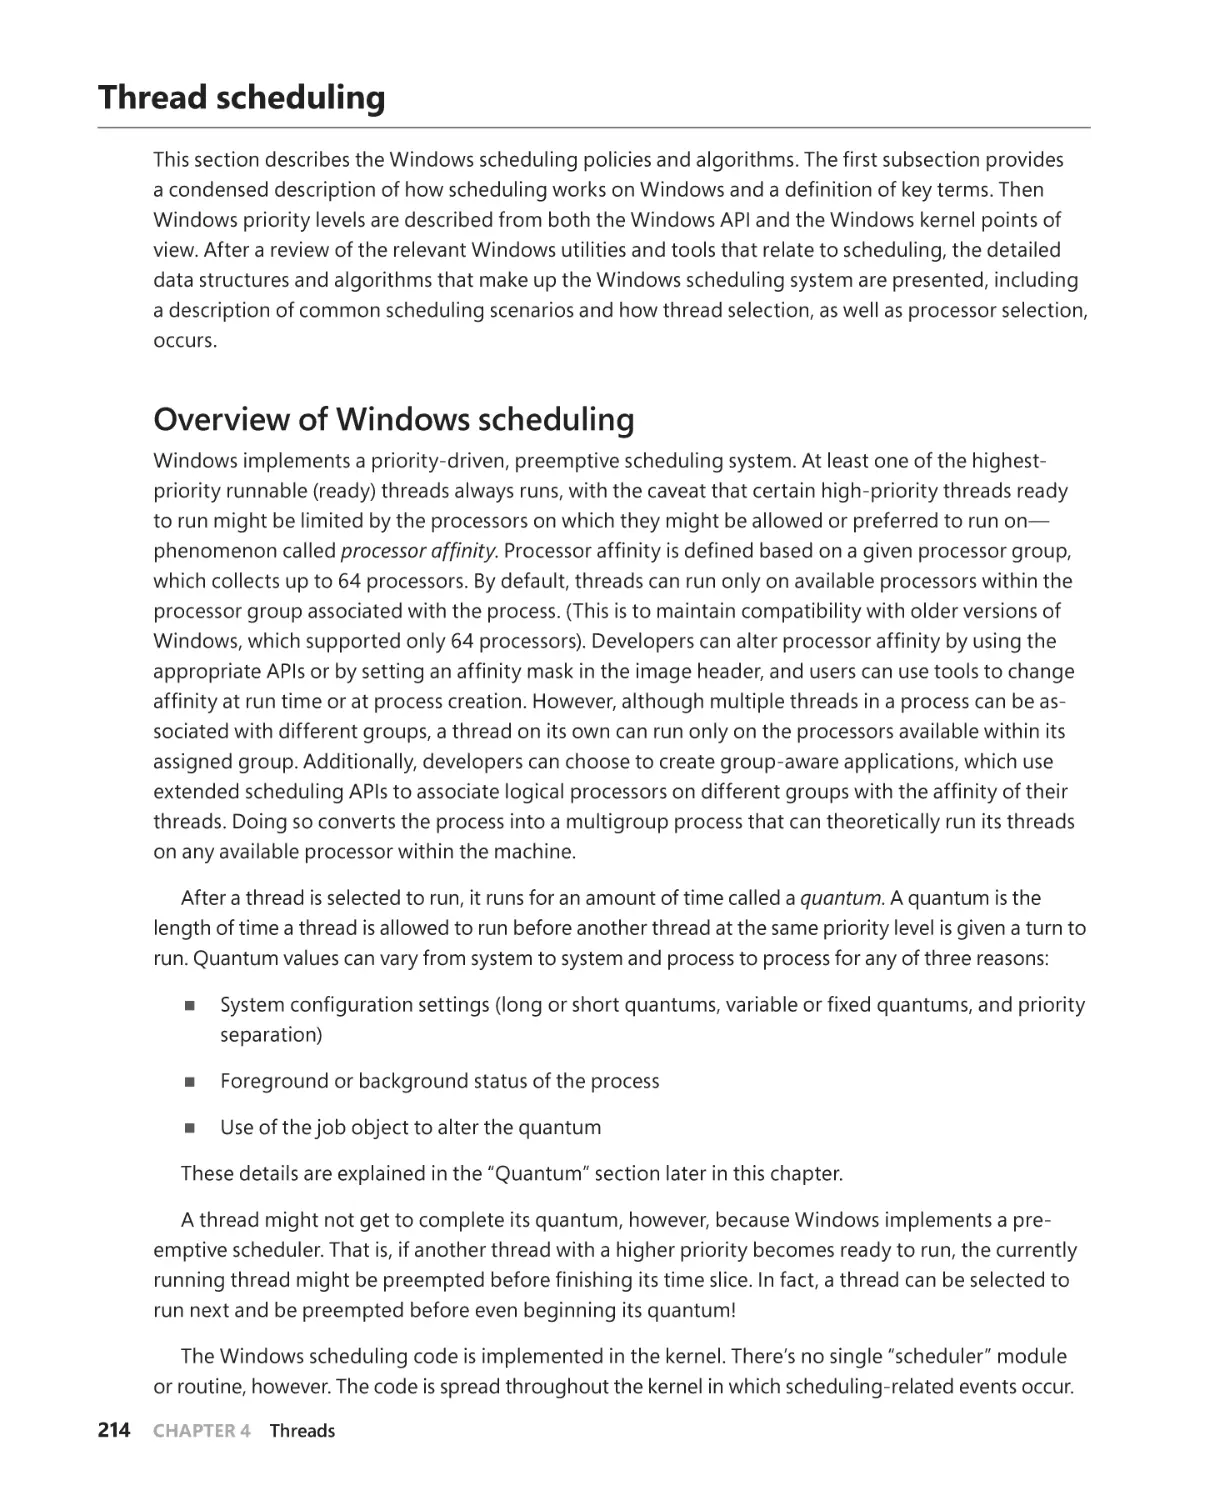 Thread scheduling
Overview of Windows scheduling